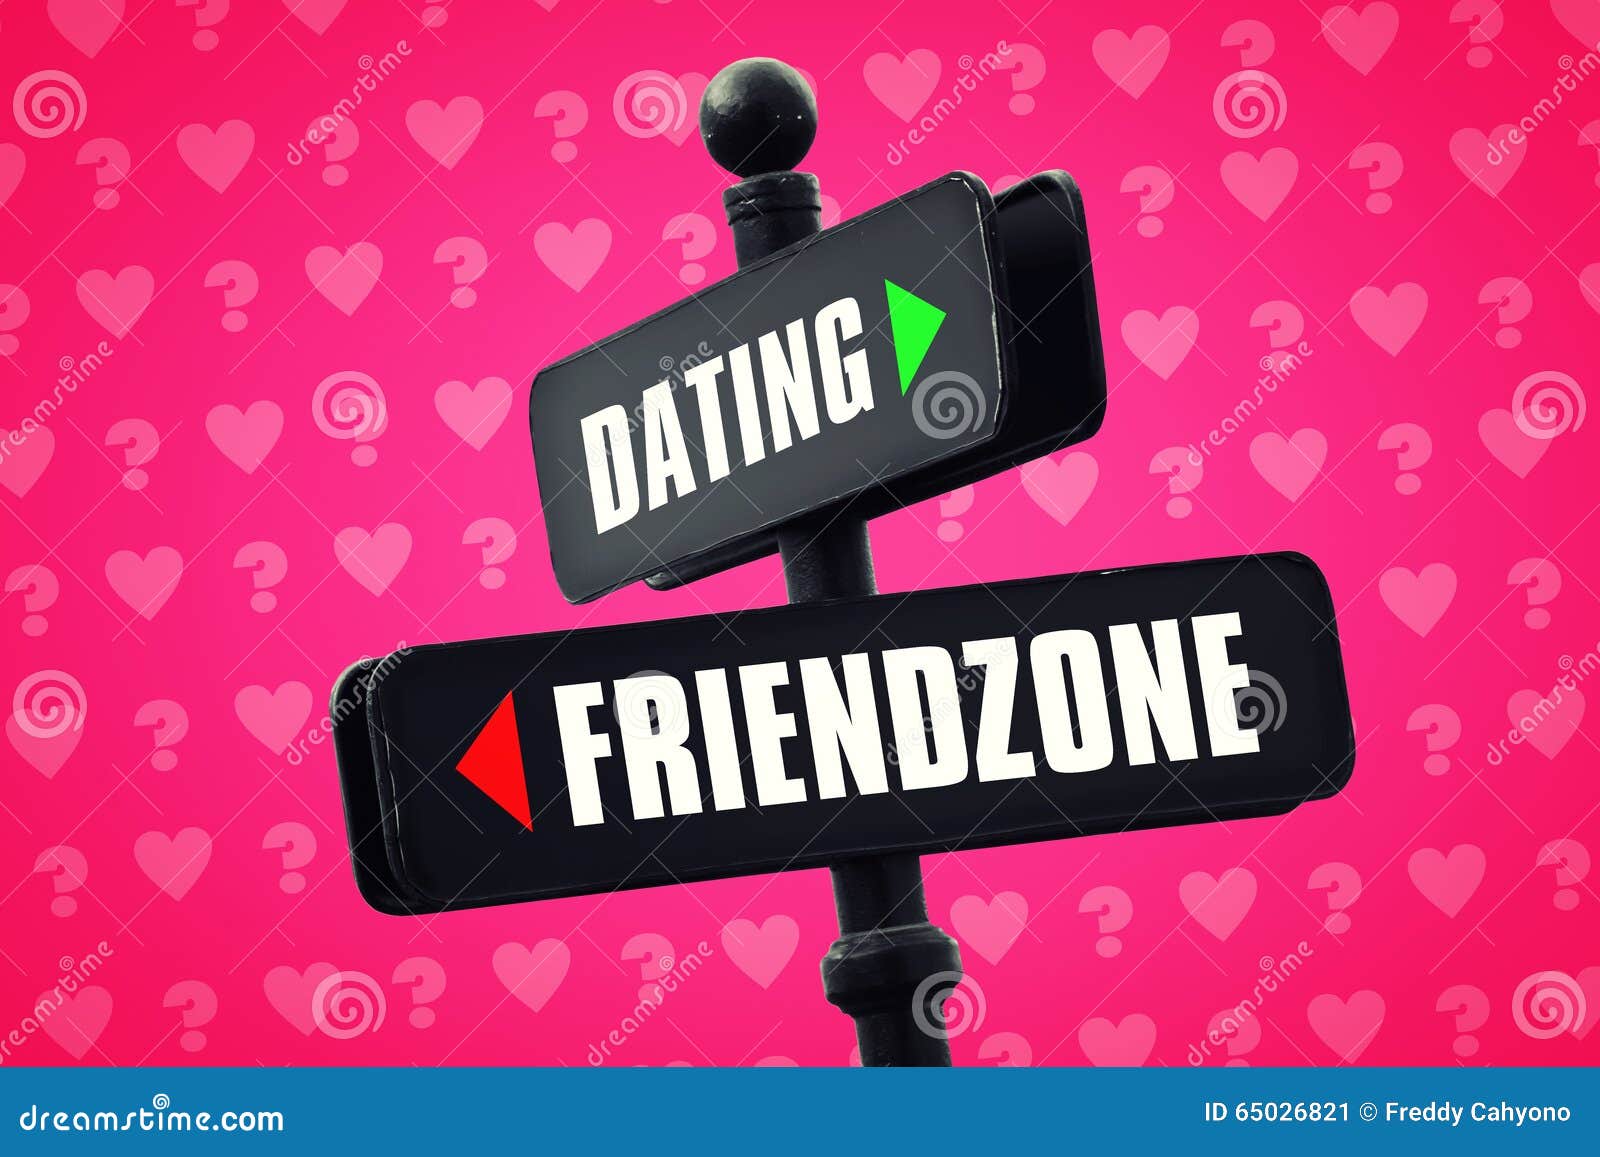 Dating login -0 dating friend zone